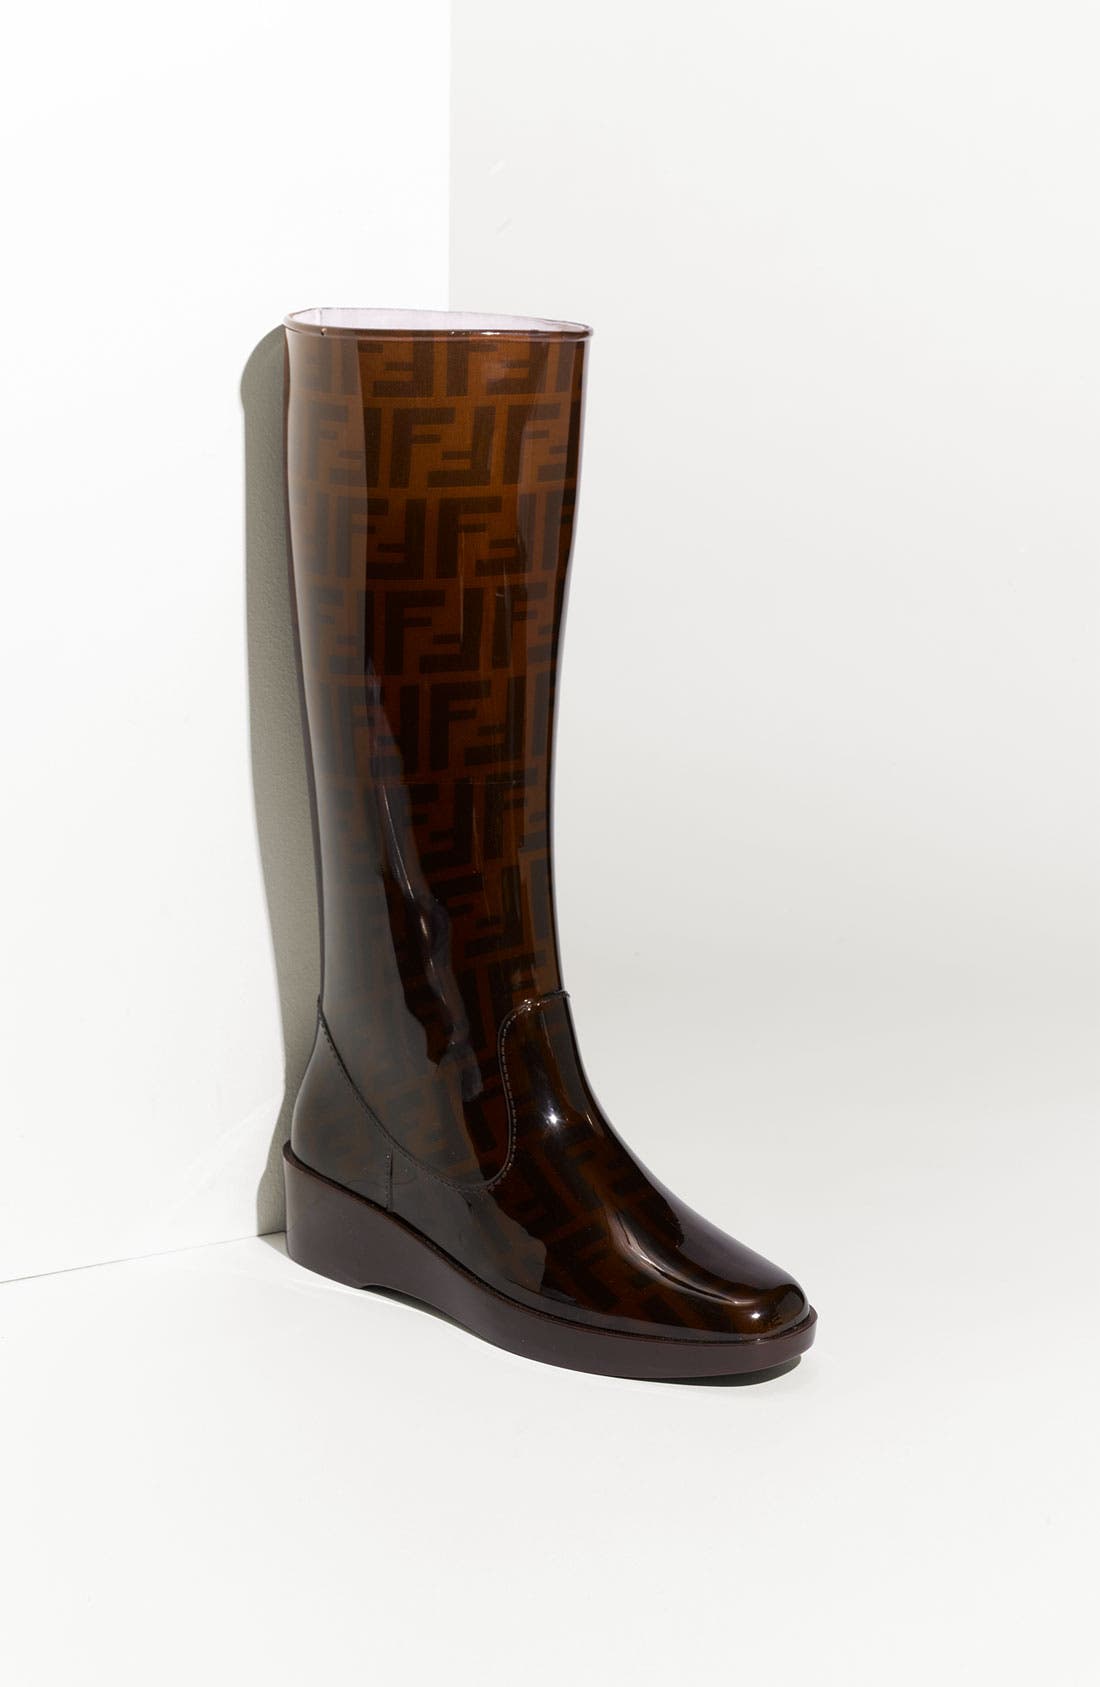 fendi rain boots sale